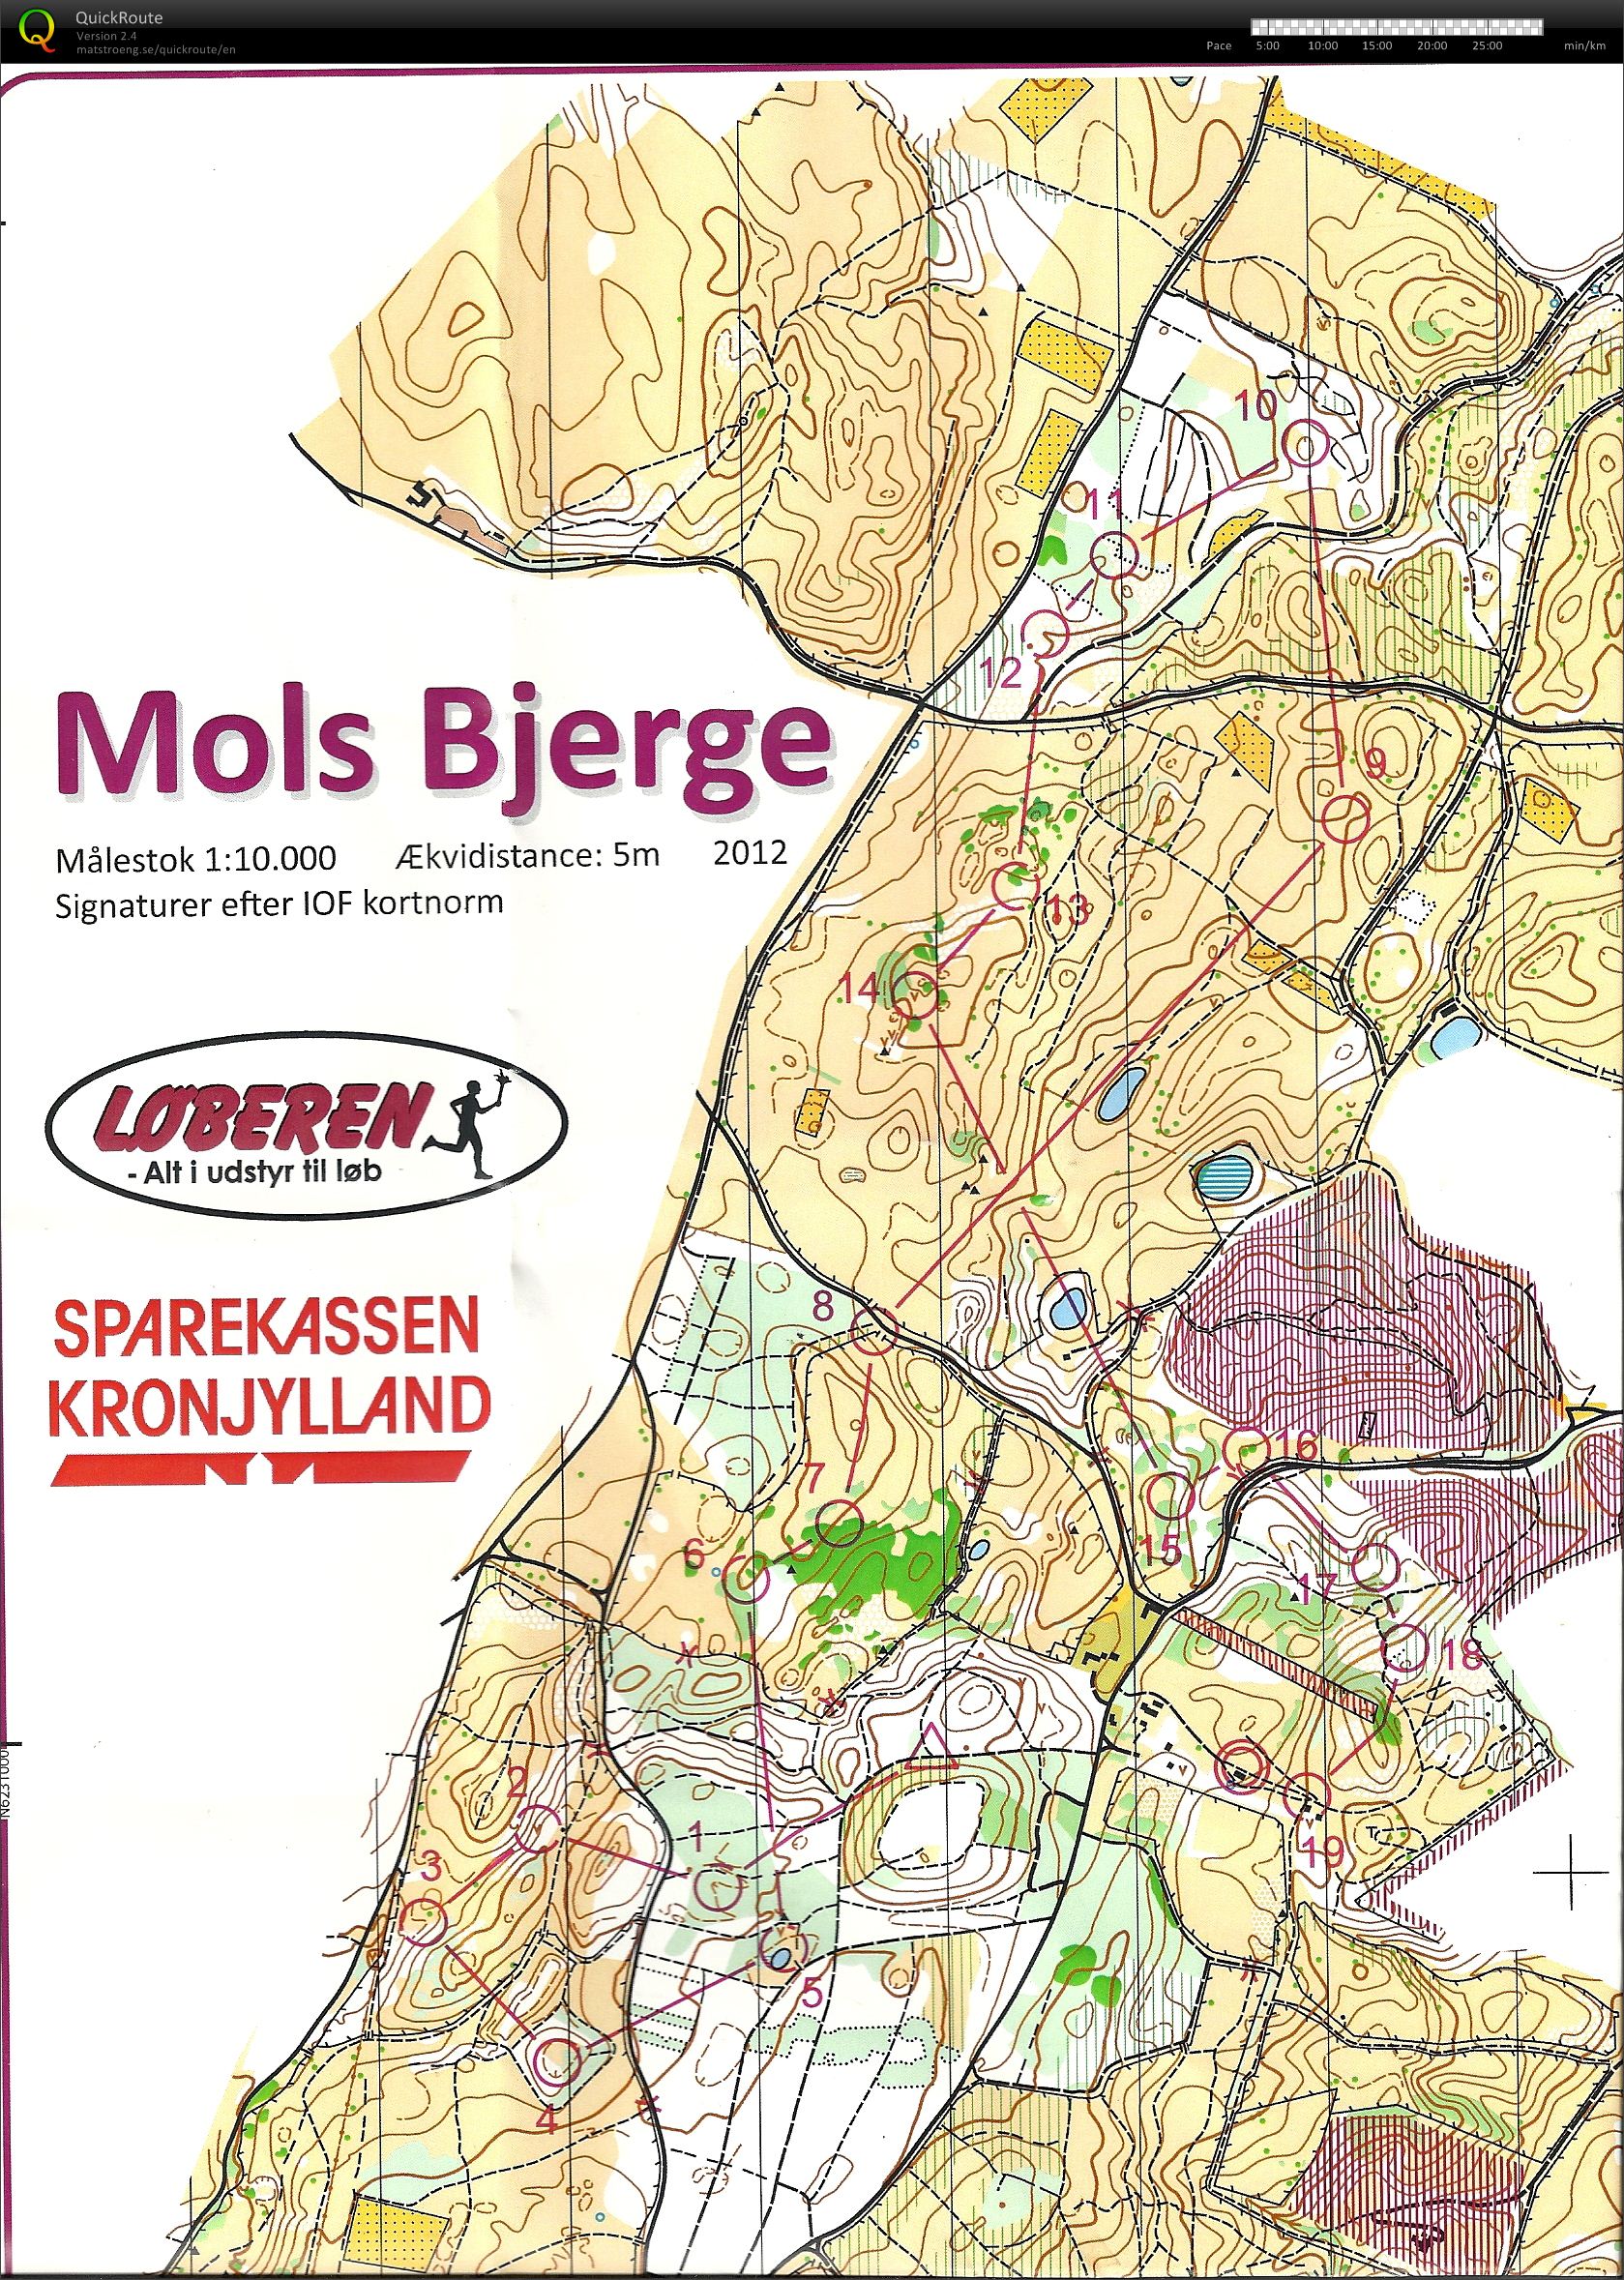 Mols Bjerge, JFM Lang, D45, LeneSN (2012-08-19)